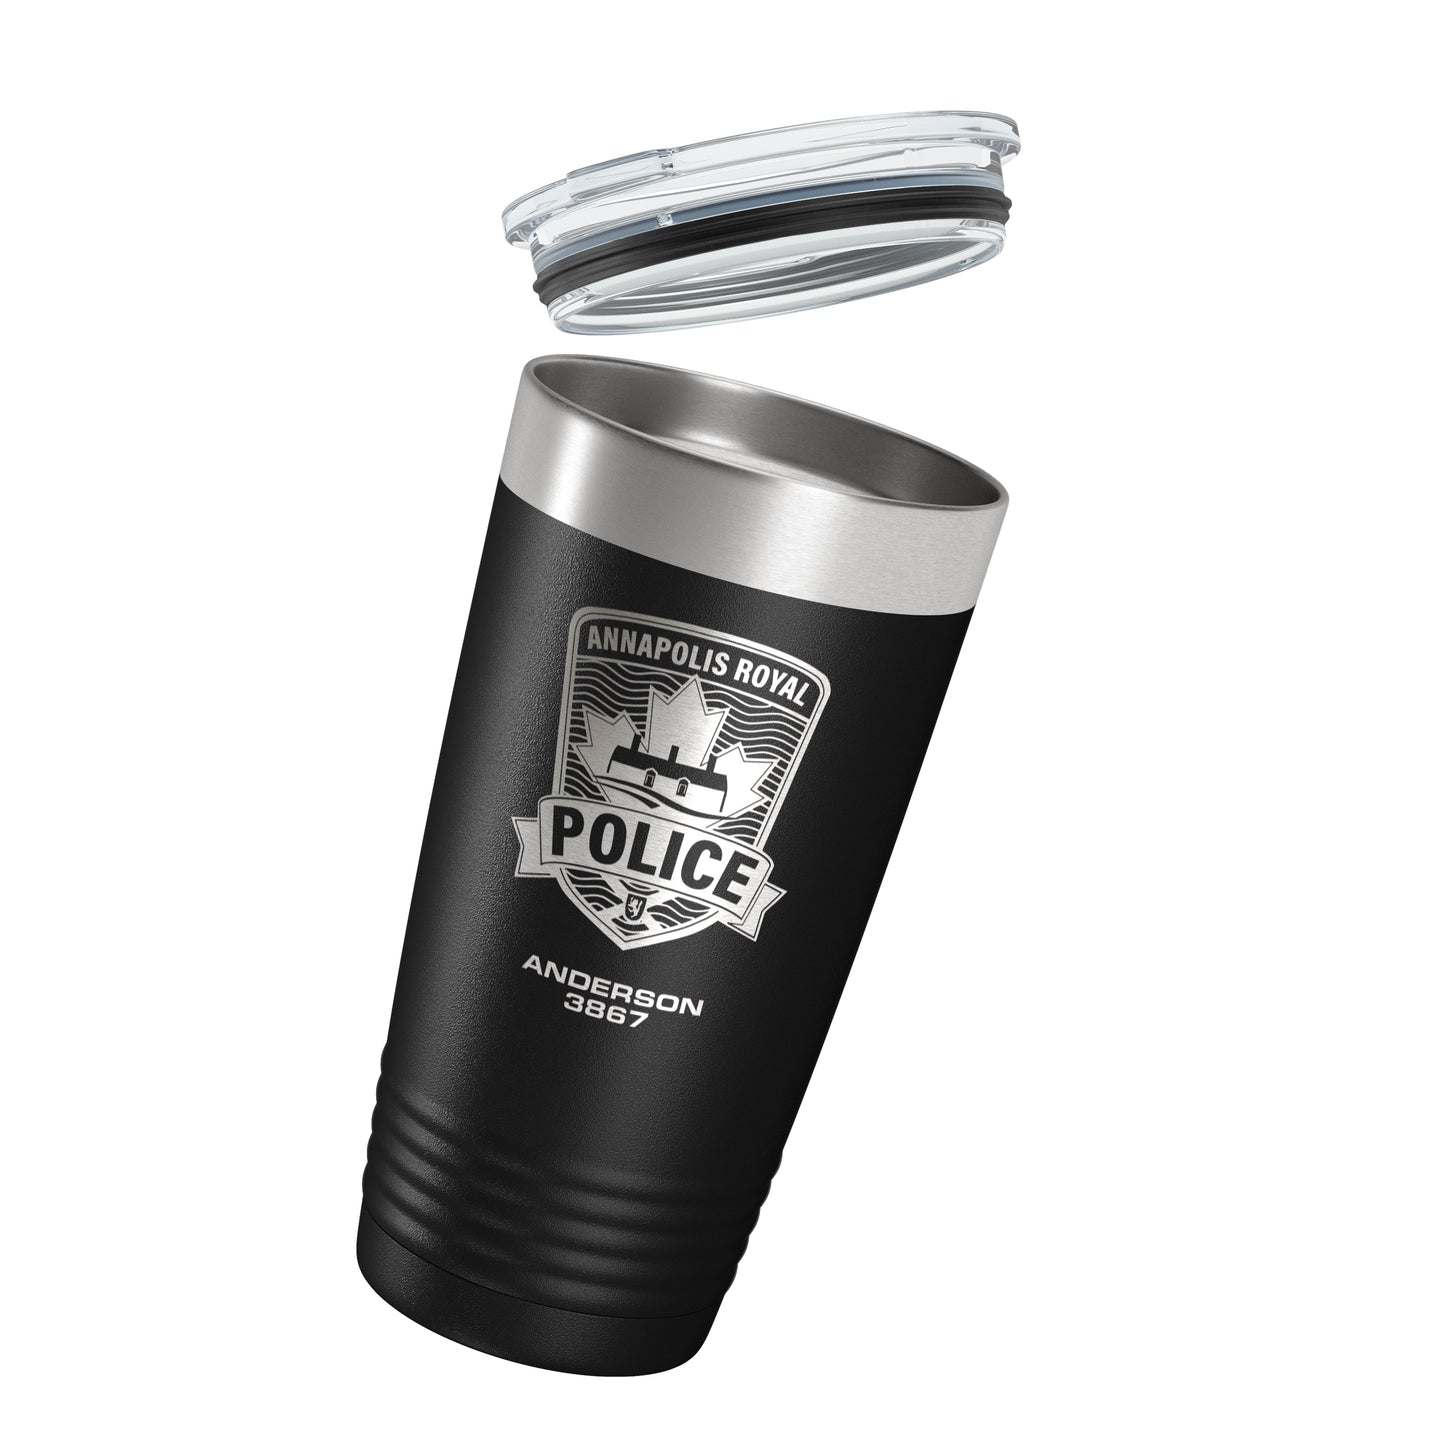 Annapolis Royal Police Black Vacuum Insulated Tumbler